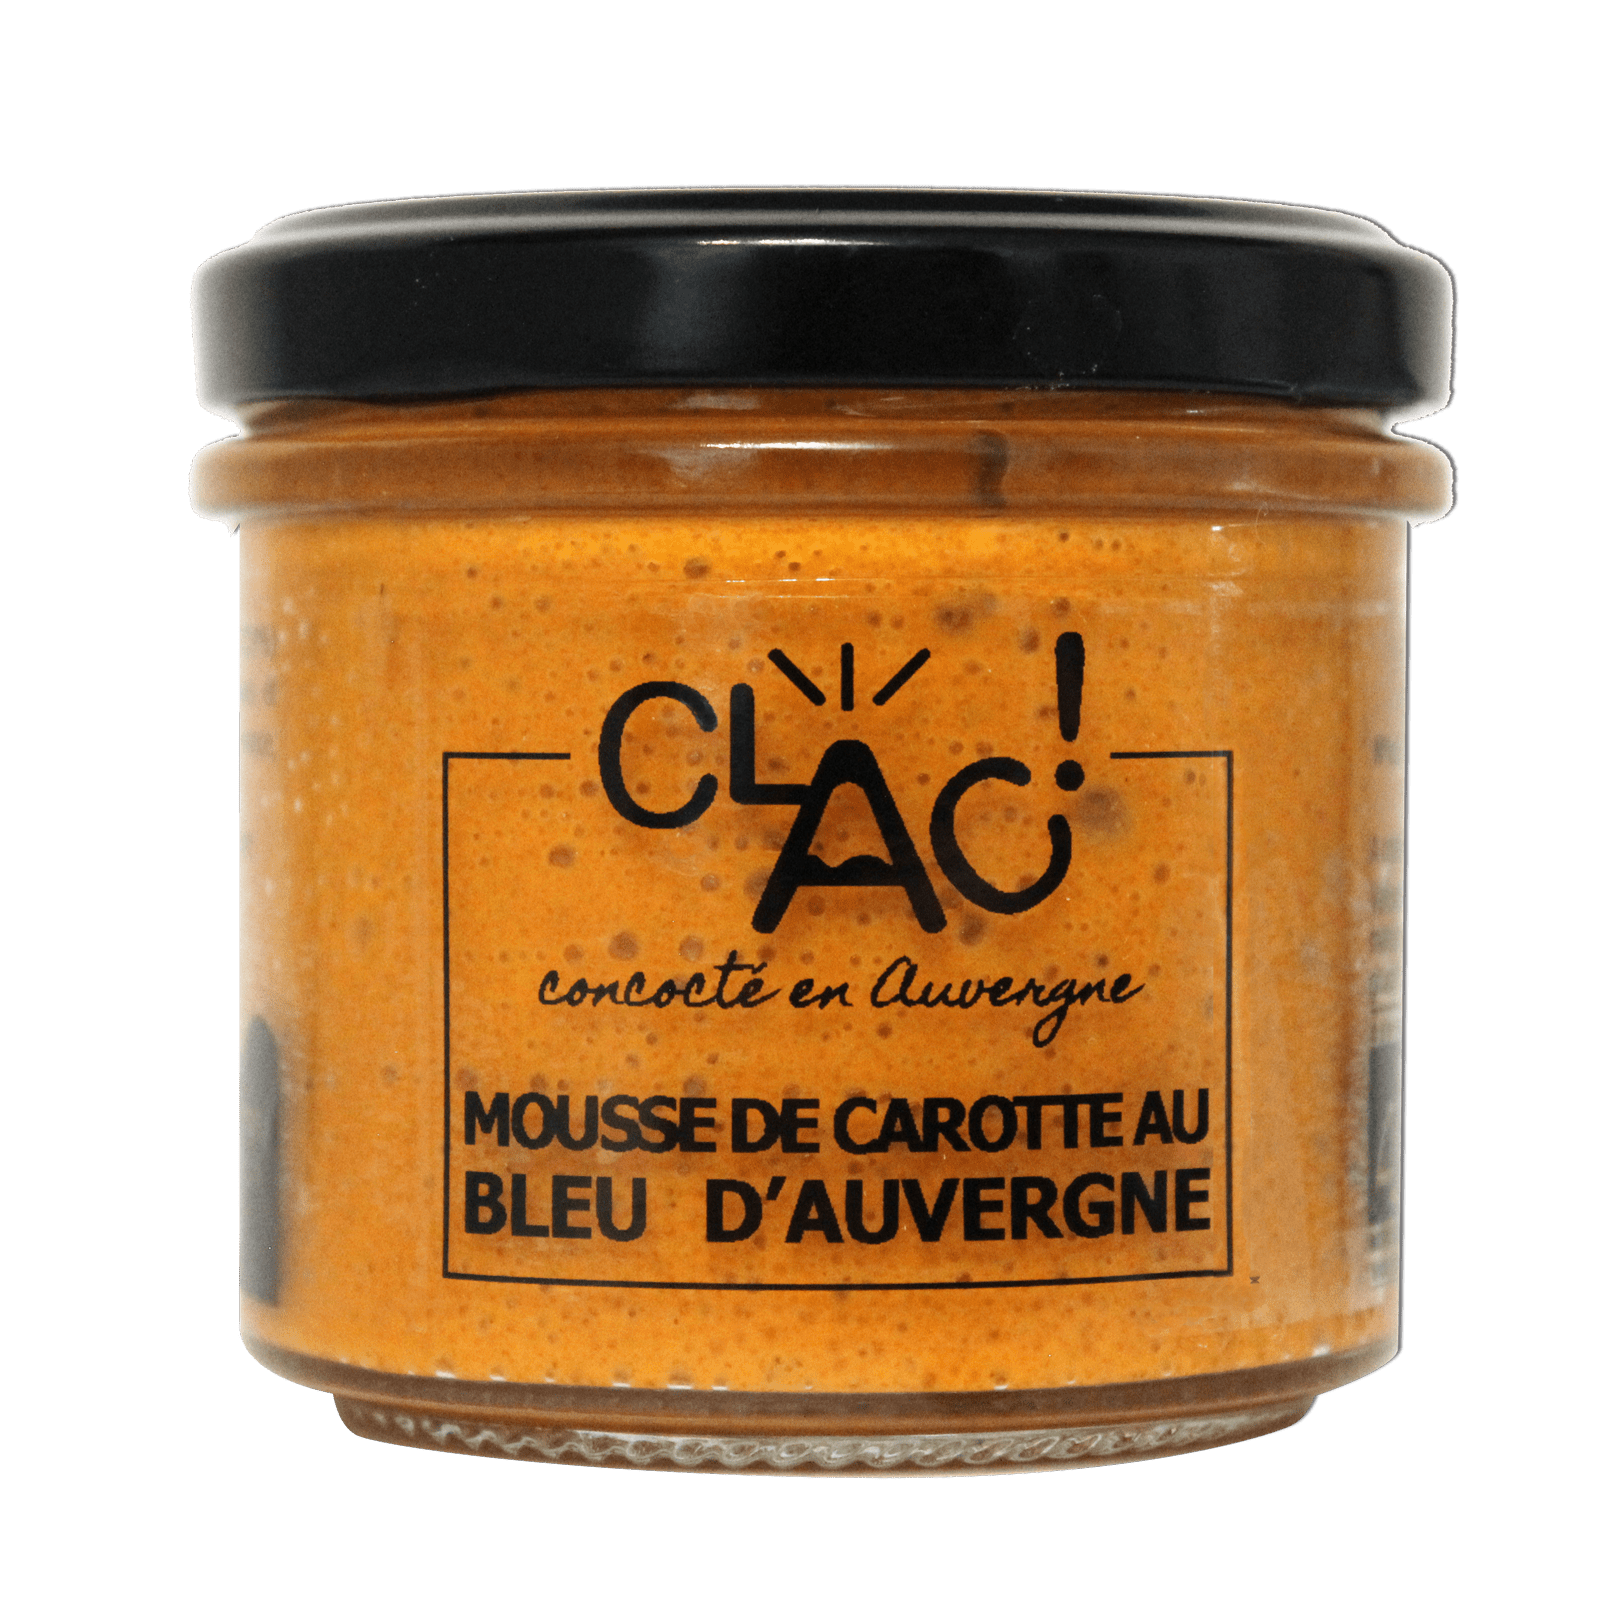 Carotte-Bleu-d'auvergne Clac